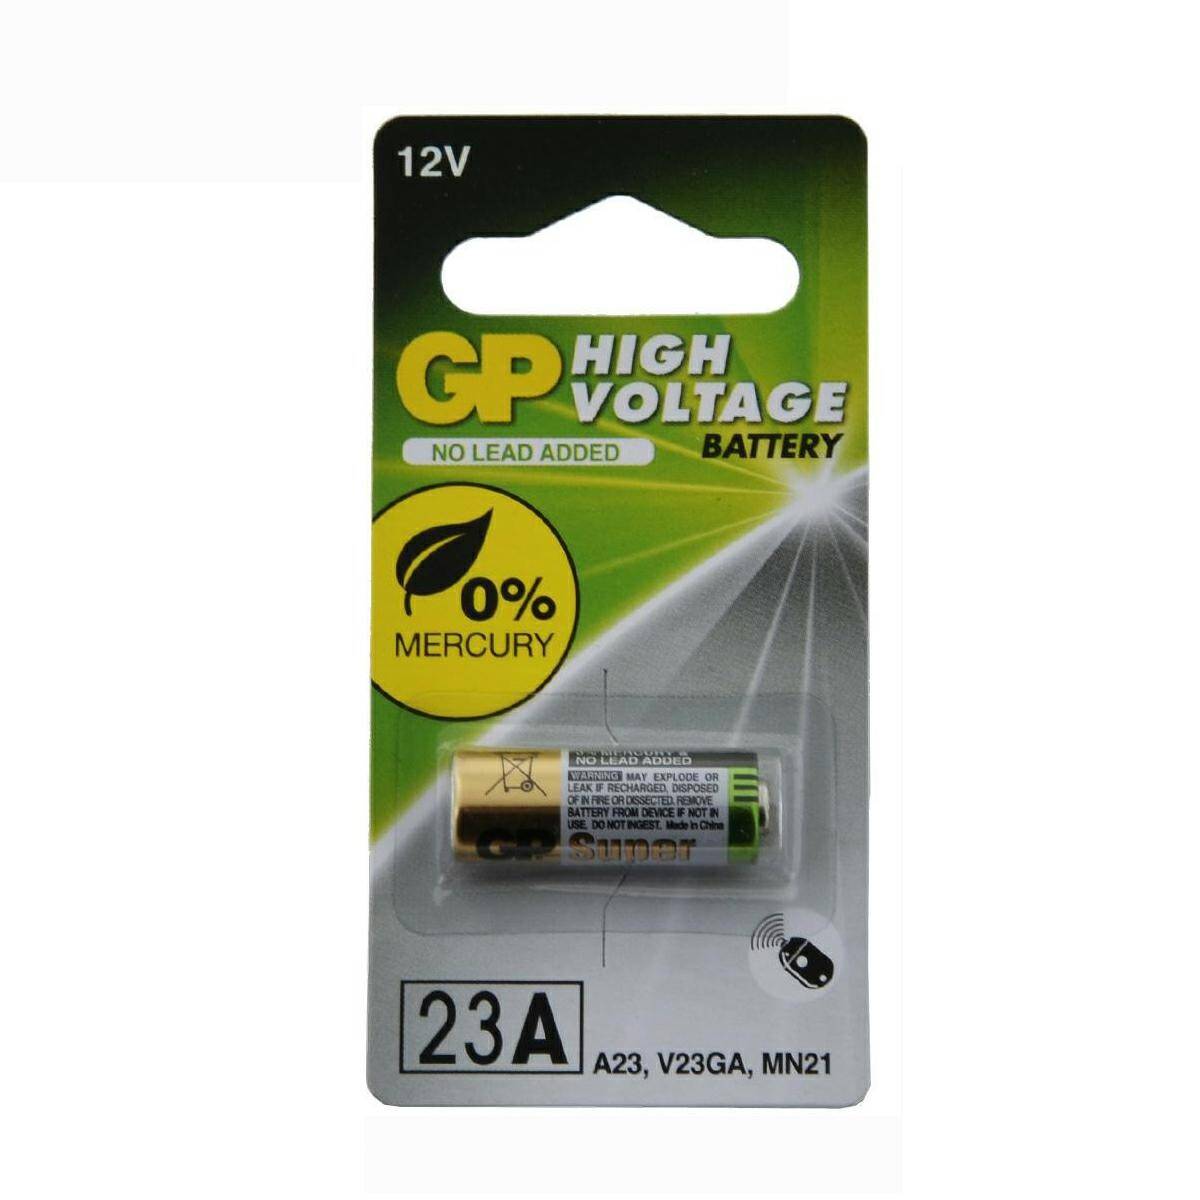 Lithium Battery GP 23A 12V